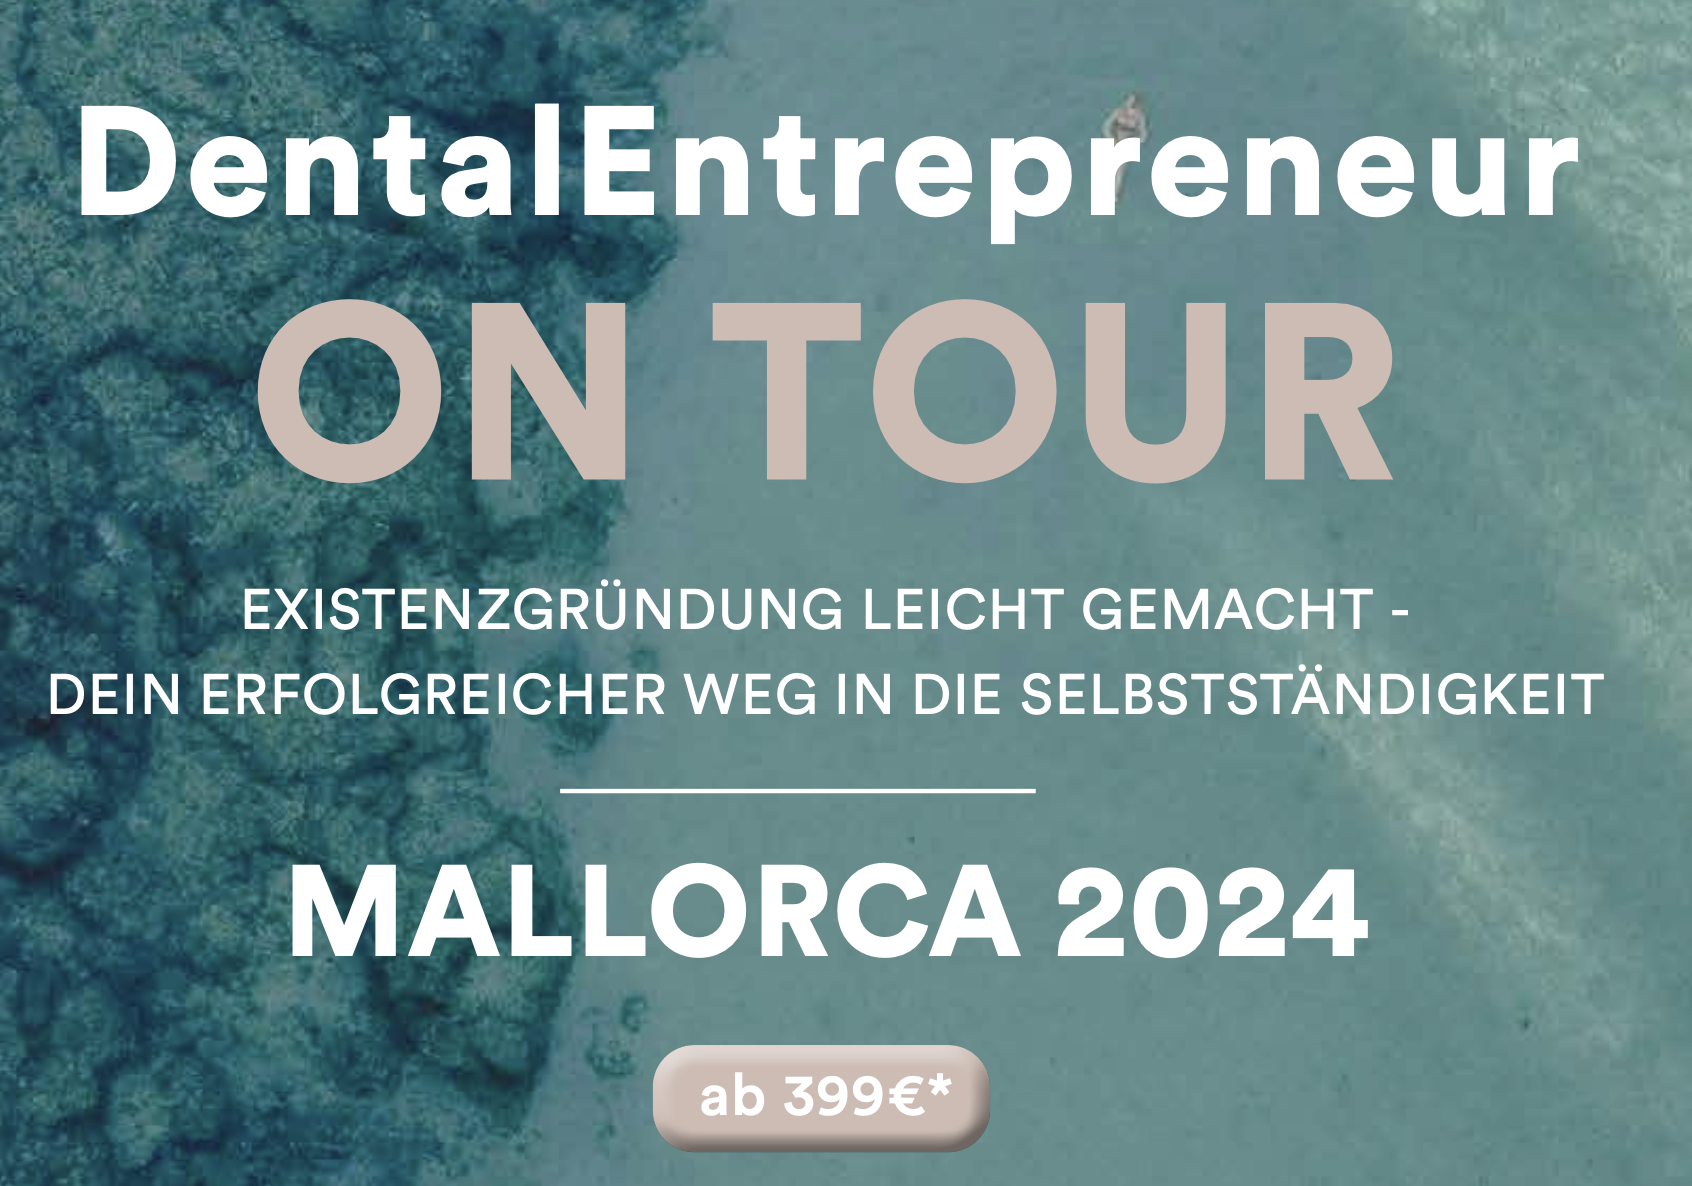 DentalEntrepreneur on Tour - Existenzgründerseminar auf Mallorca